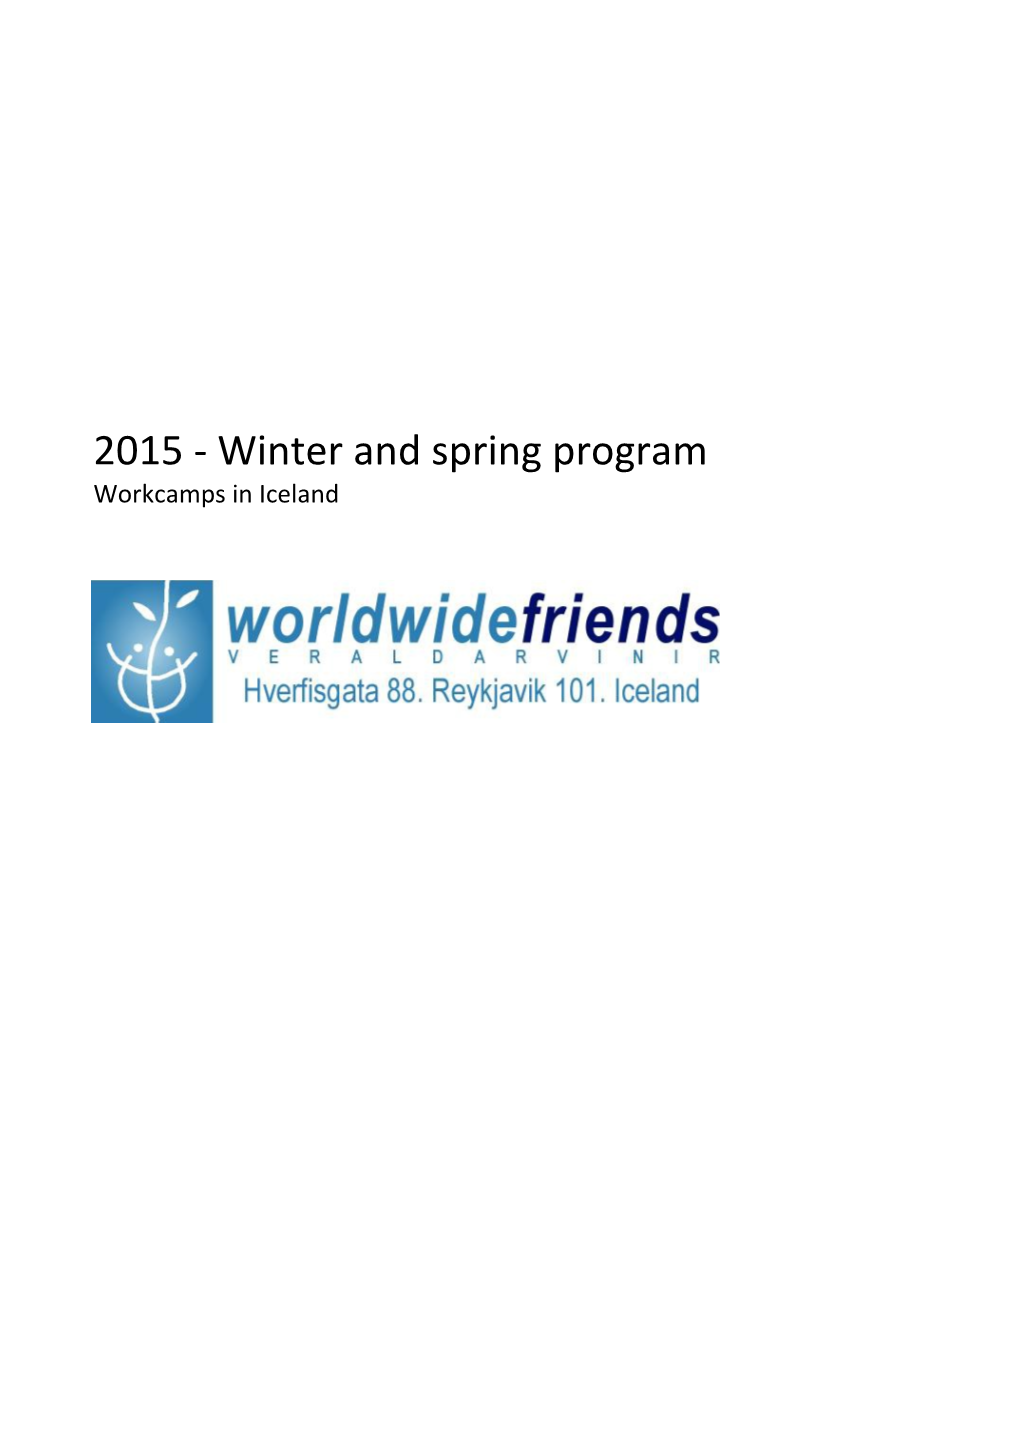 2015- Winter and Spring Program